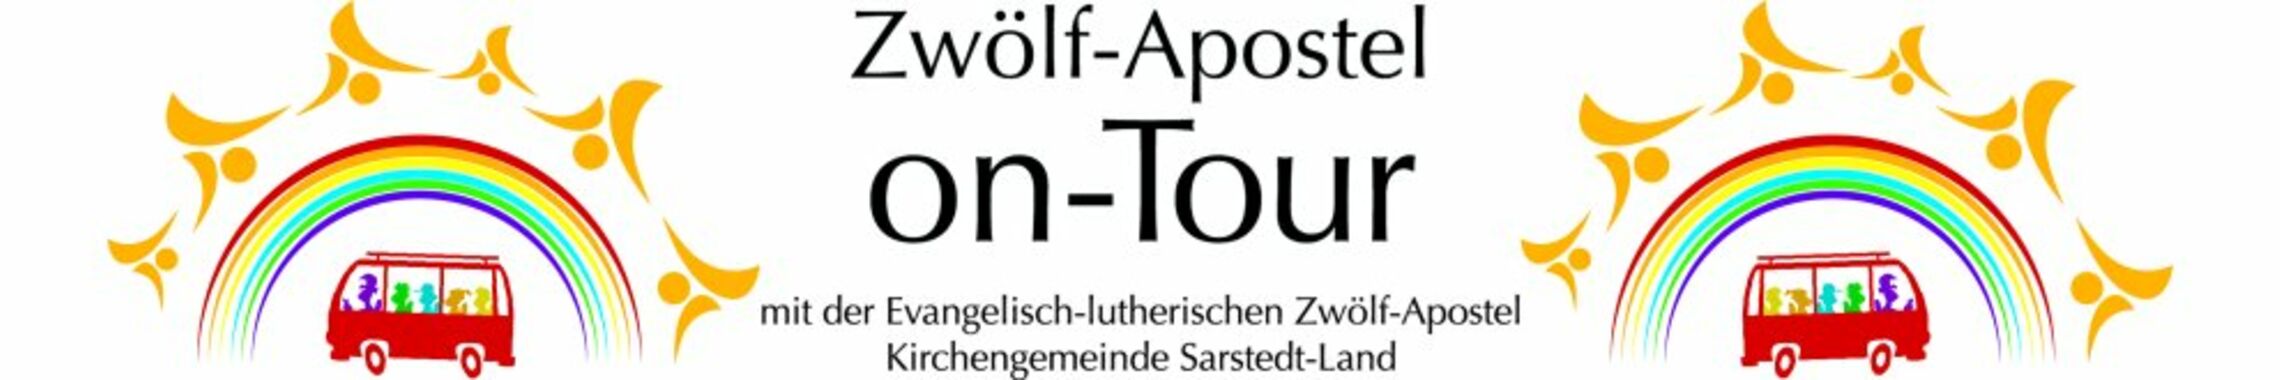 Logo Zwölf-Apostel on Tour / neu 2019 breit (Kopfformat)